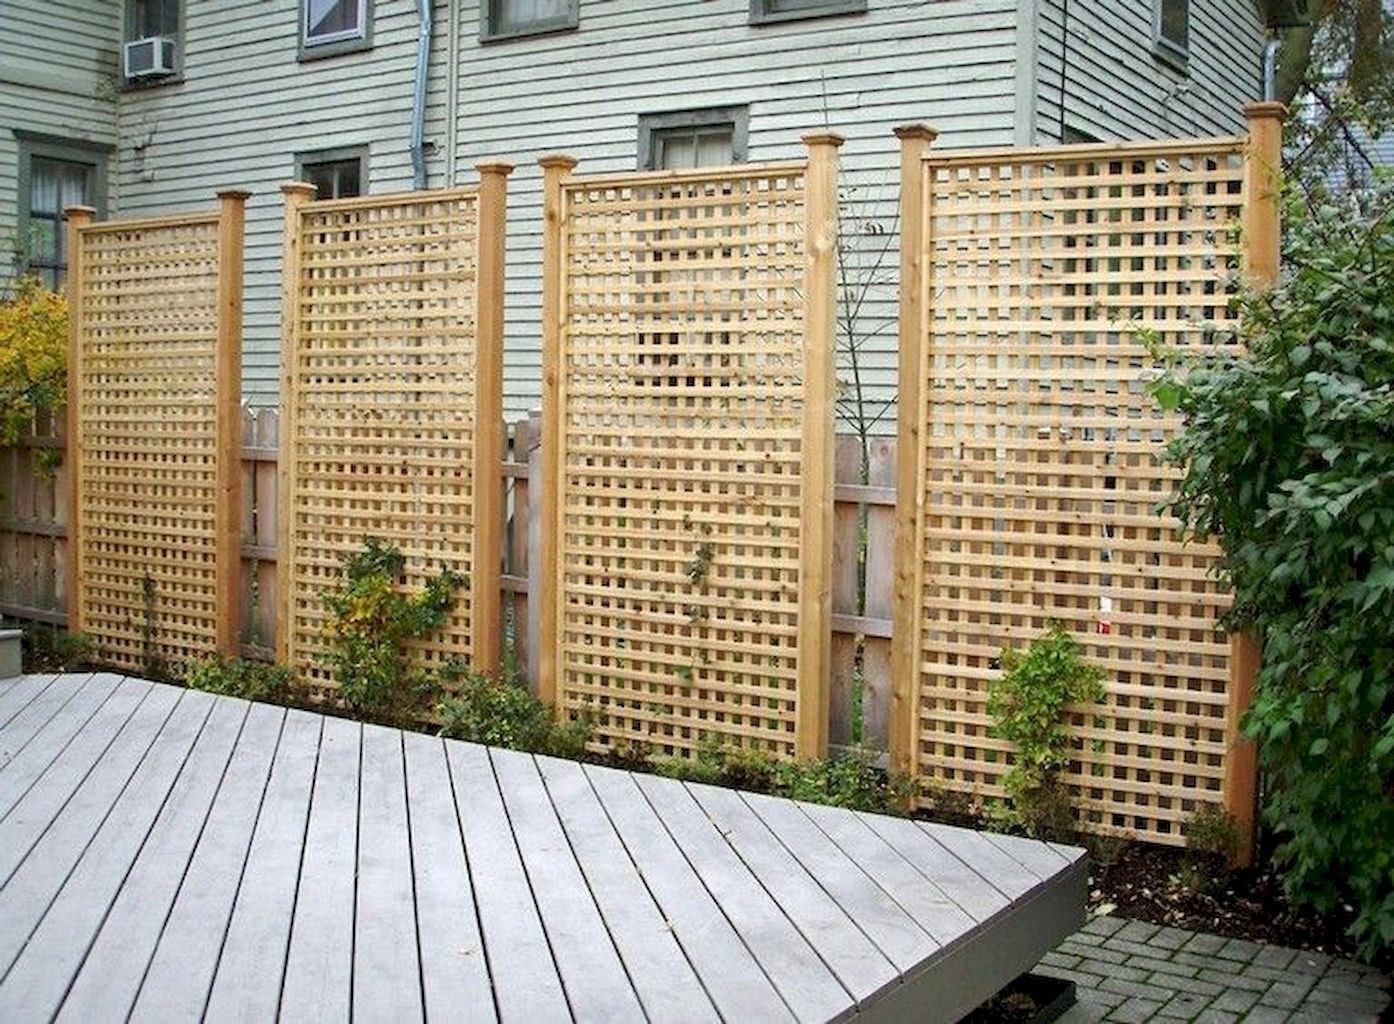 Закрытый забор на даче. Деревянный забор. Забор из реек деревянных. Решетчатый забор деревянный. Деревянный заборчик для сада.